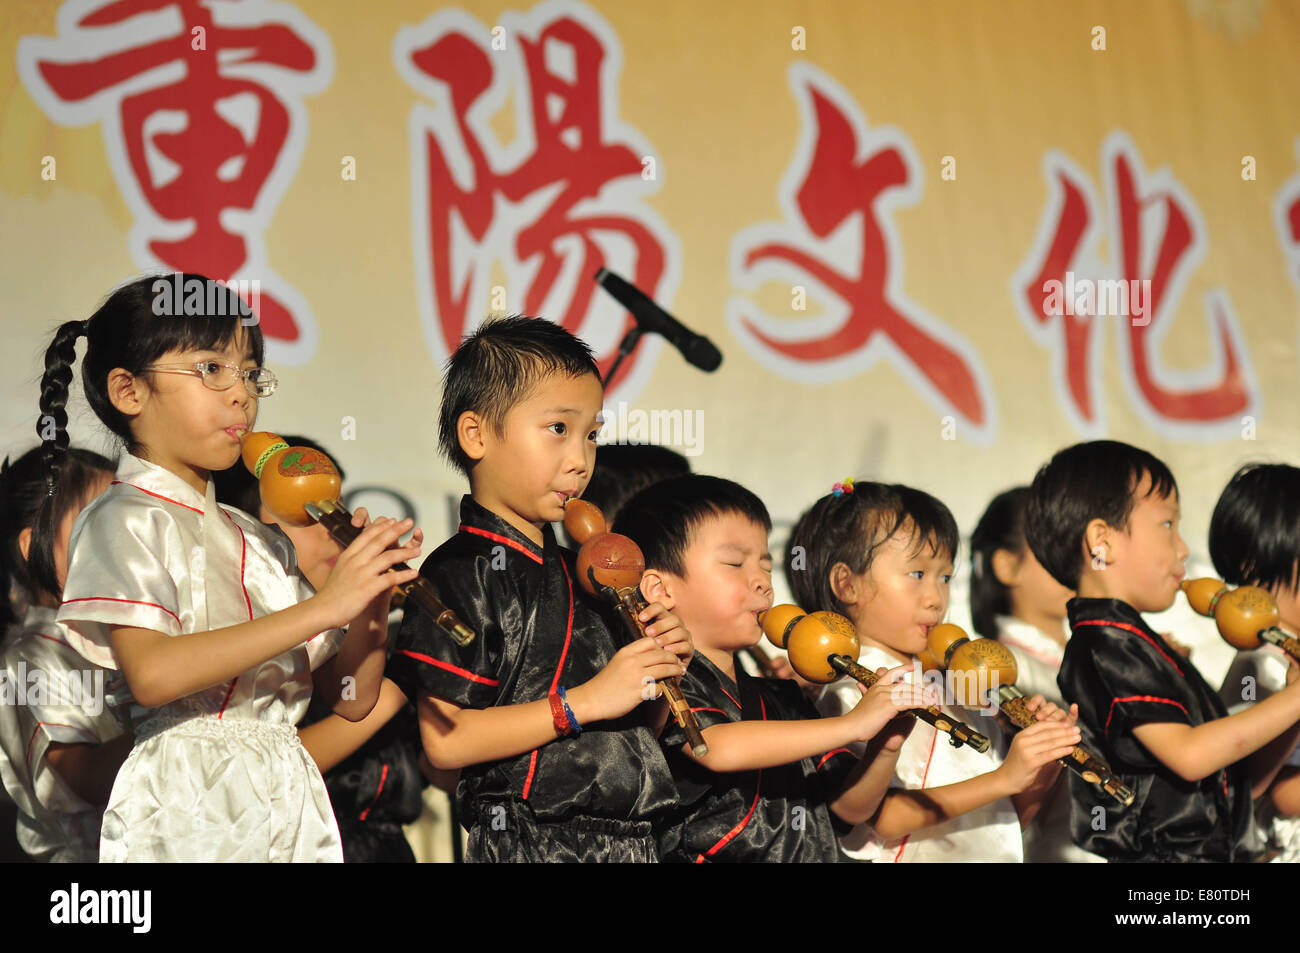 (140928) -- SELANGOR(MALAYSIA), Sept. 28, 2014 (Xinhua) -- Children play cucurbit flute during an activity marking the Double-Ninth Festival, or Chongyang Festival, a traditional Chinese festival, in Selangor, Malaysia, Sept. 28, 2014. (Xinhua/Chong Voon Chung) (lyi) Stock Photo